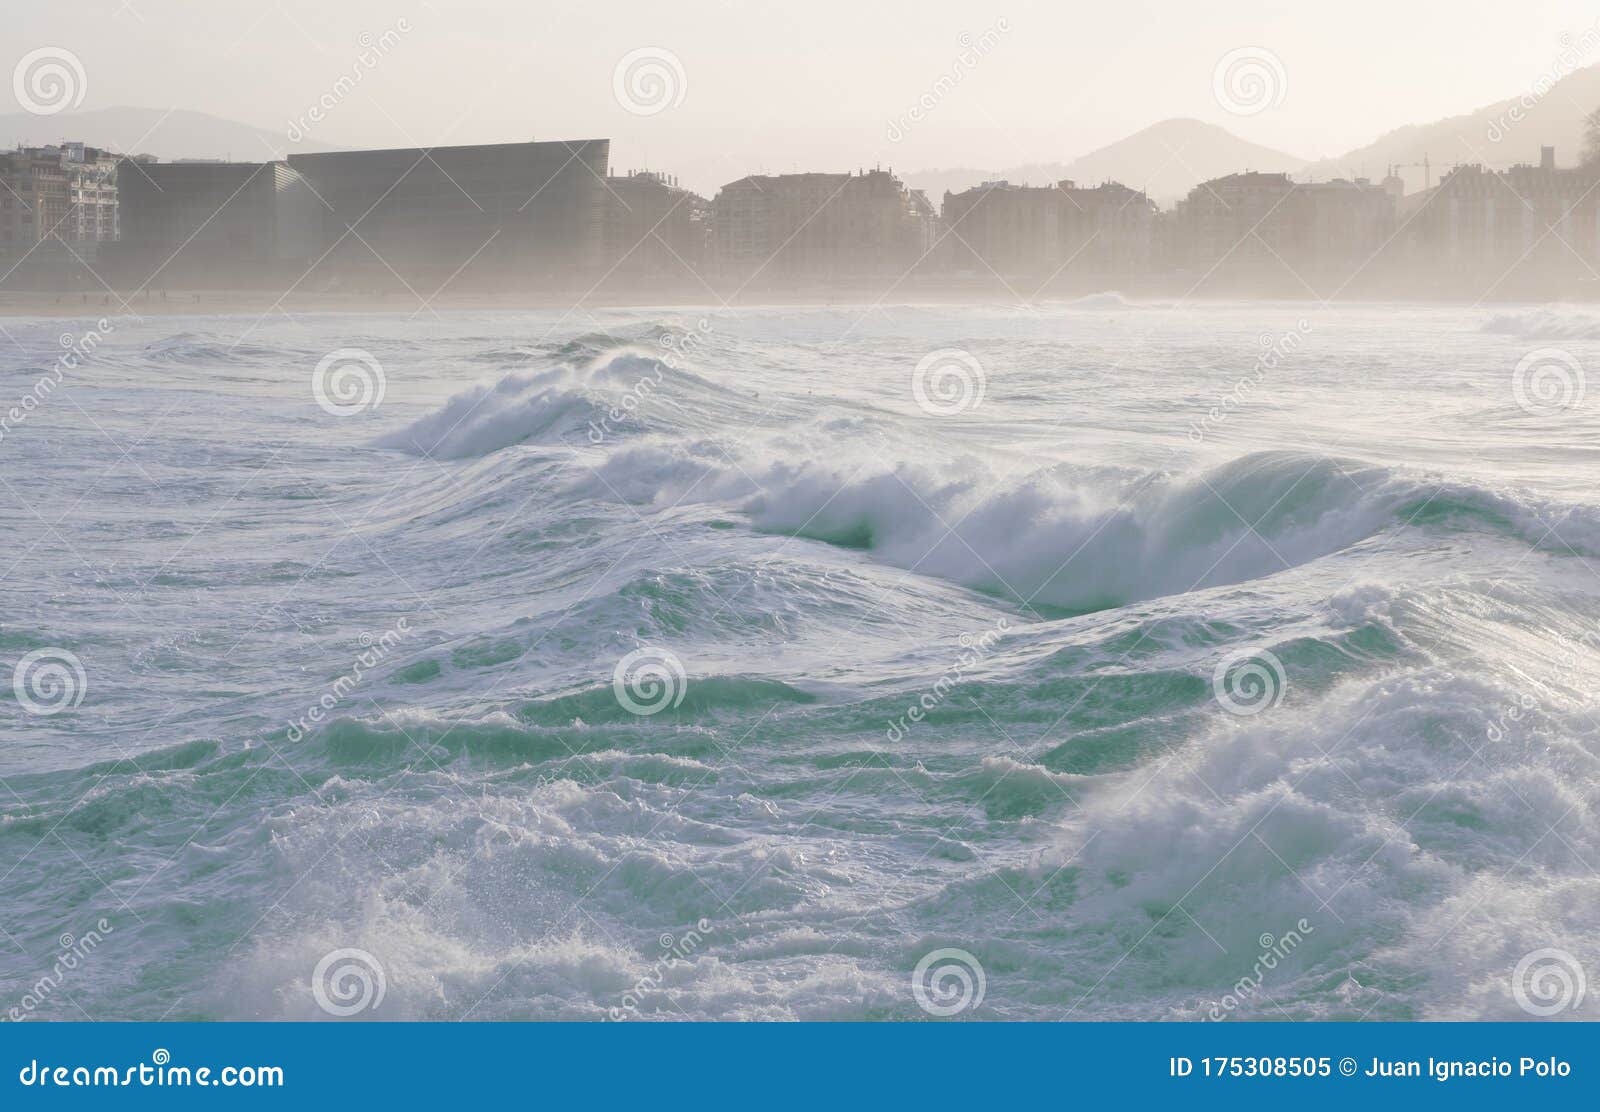 waves in front of zurriola beach, donostia city, euskadi